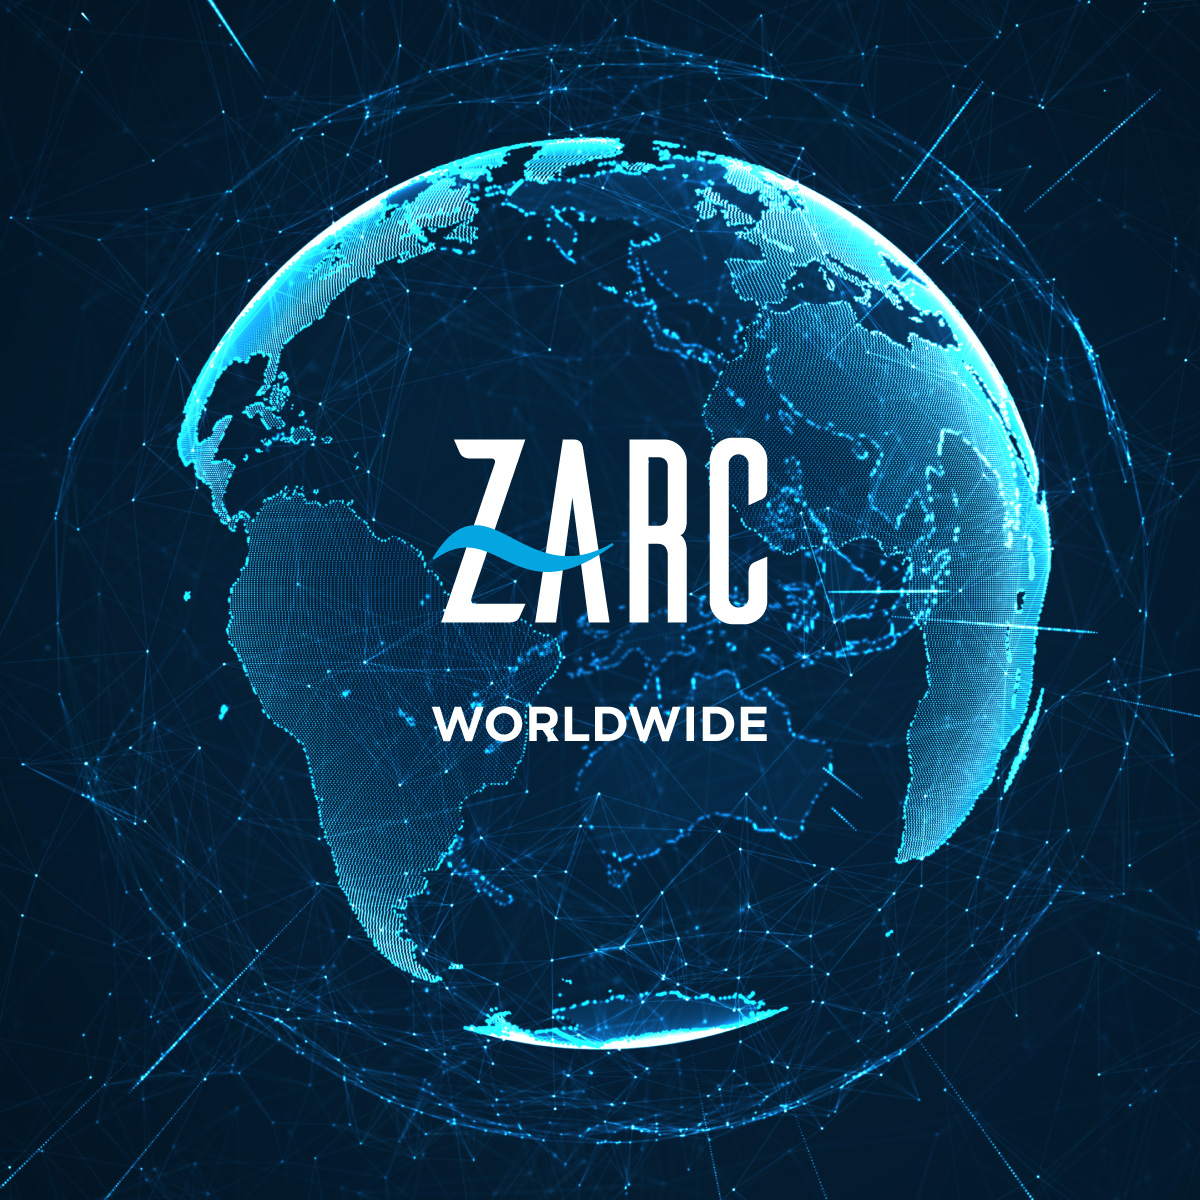 Zarc revolutionizes endodontics with BlueShaper PRO®